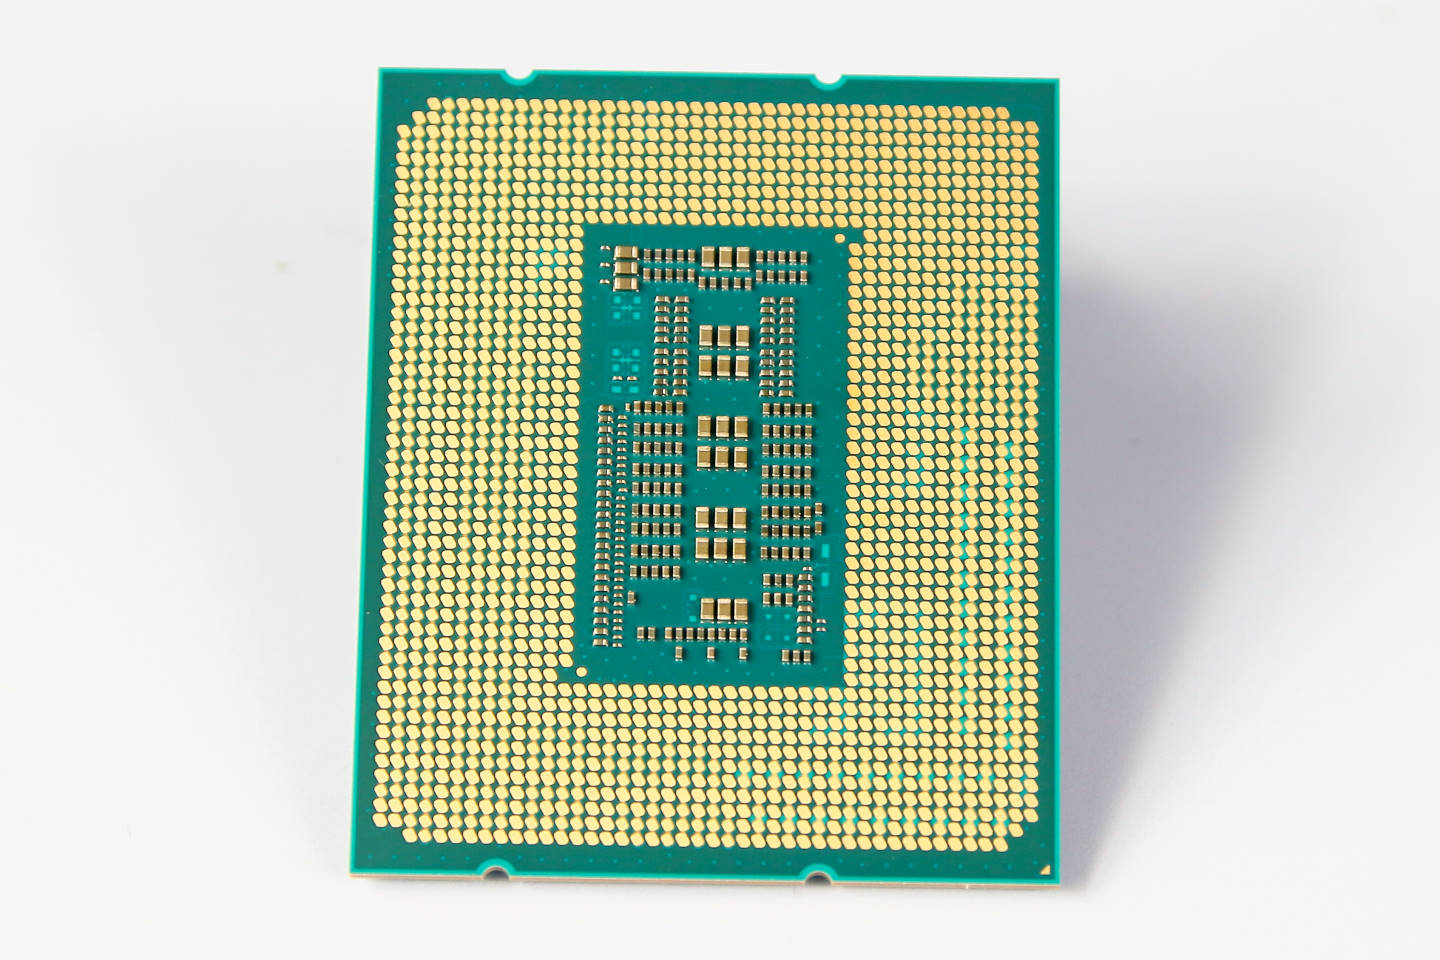 Raptor Lake Refresh處理器與先前第12、13代Core i處理器一樣採用LGA1700腳位，可以配600、700系列晶片組使用。